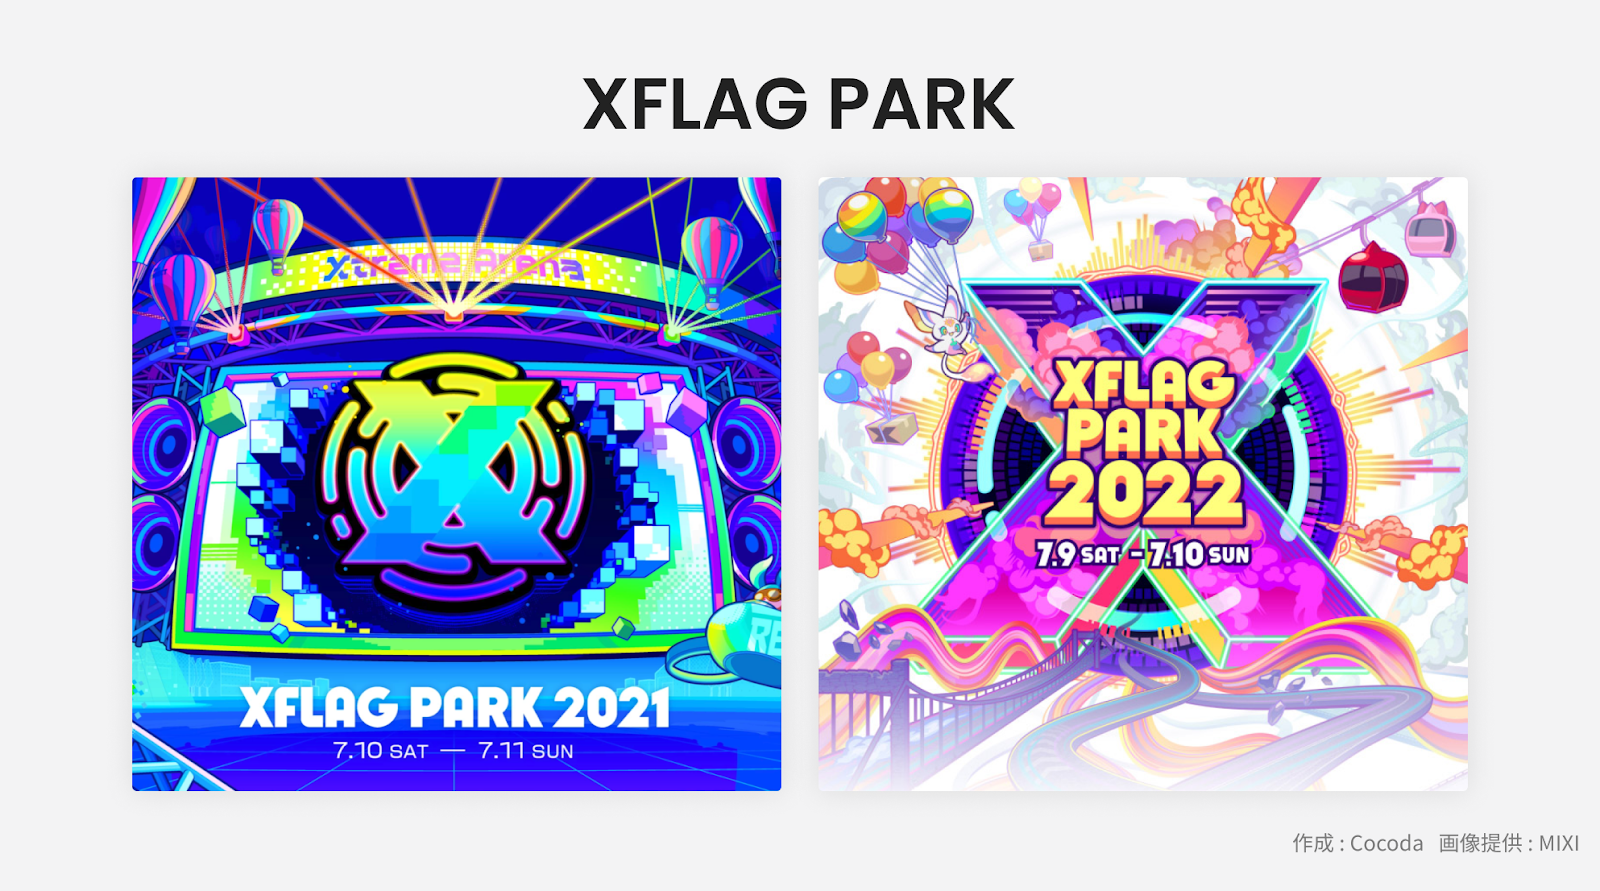 XFLAG PARK 2021・2022それぞれのキービジュアルが掲載されている。